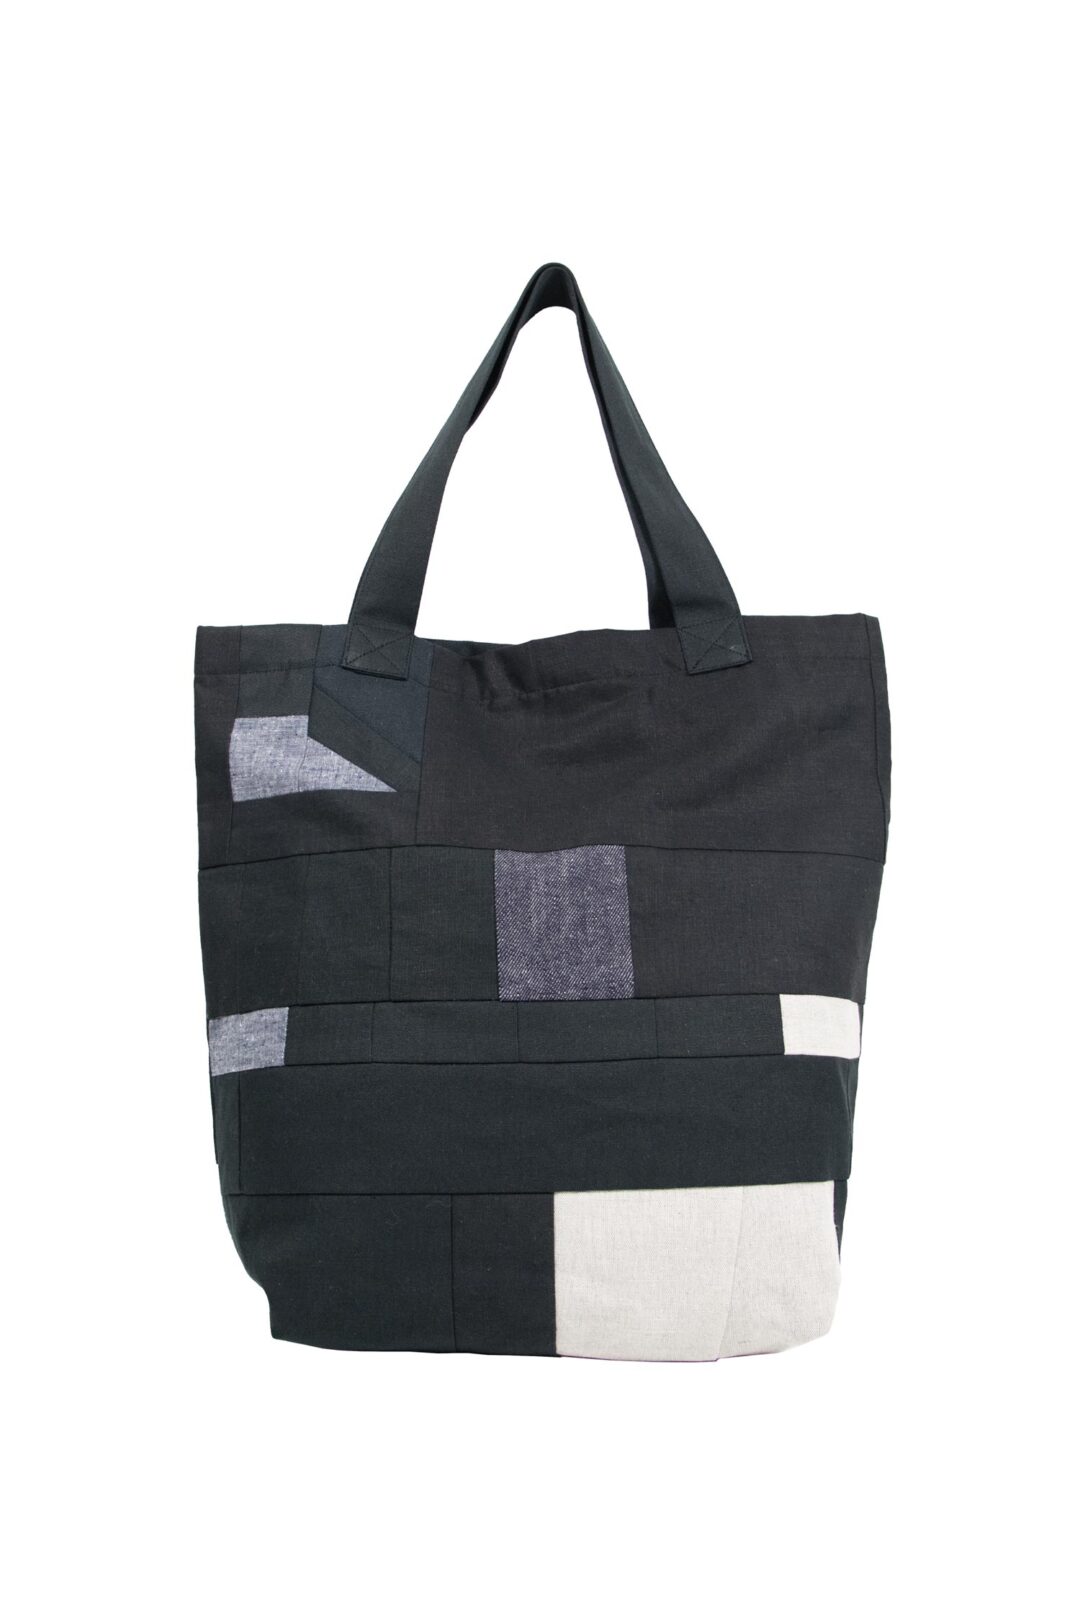 z06a-zero-waste-tote-bag-back